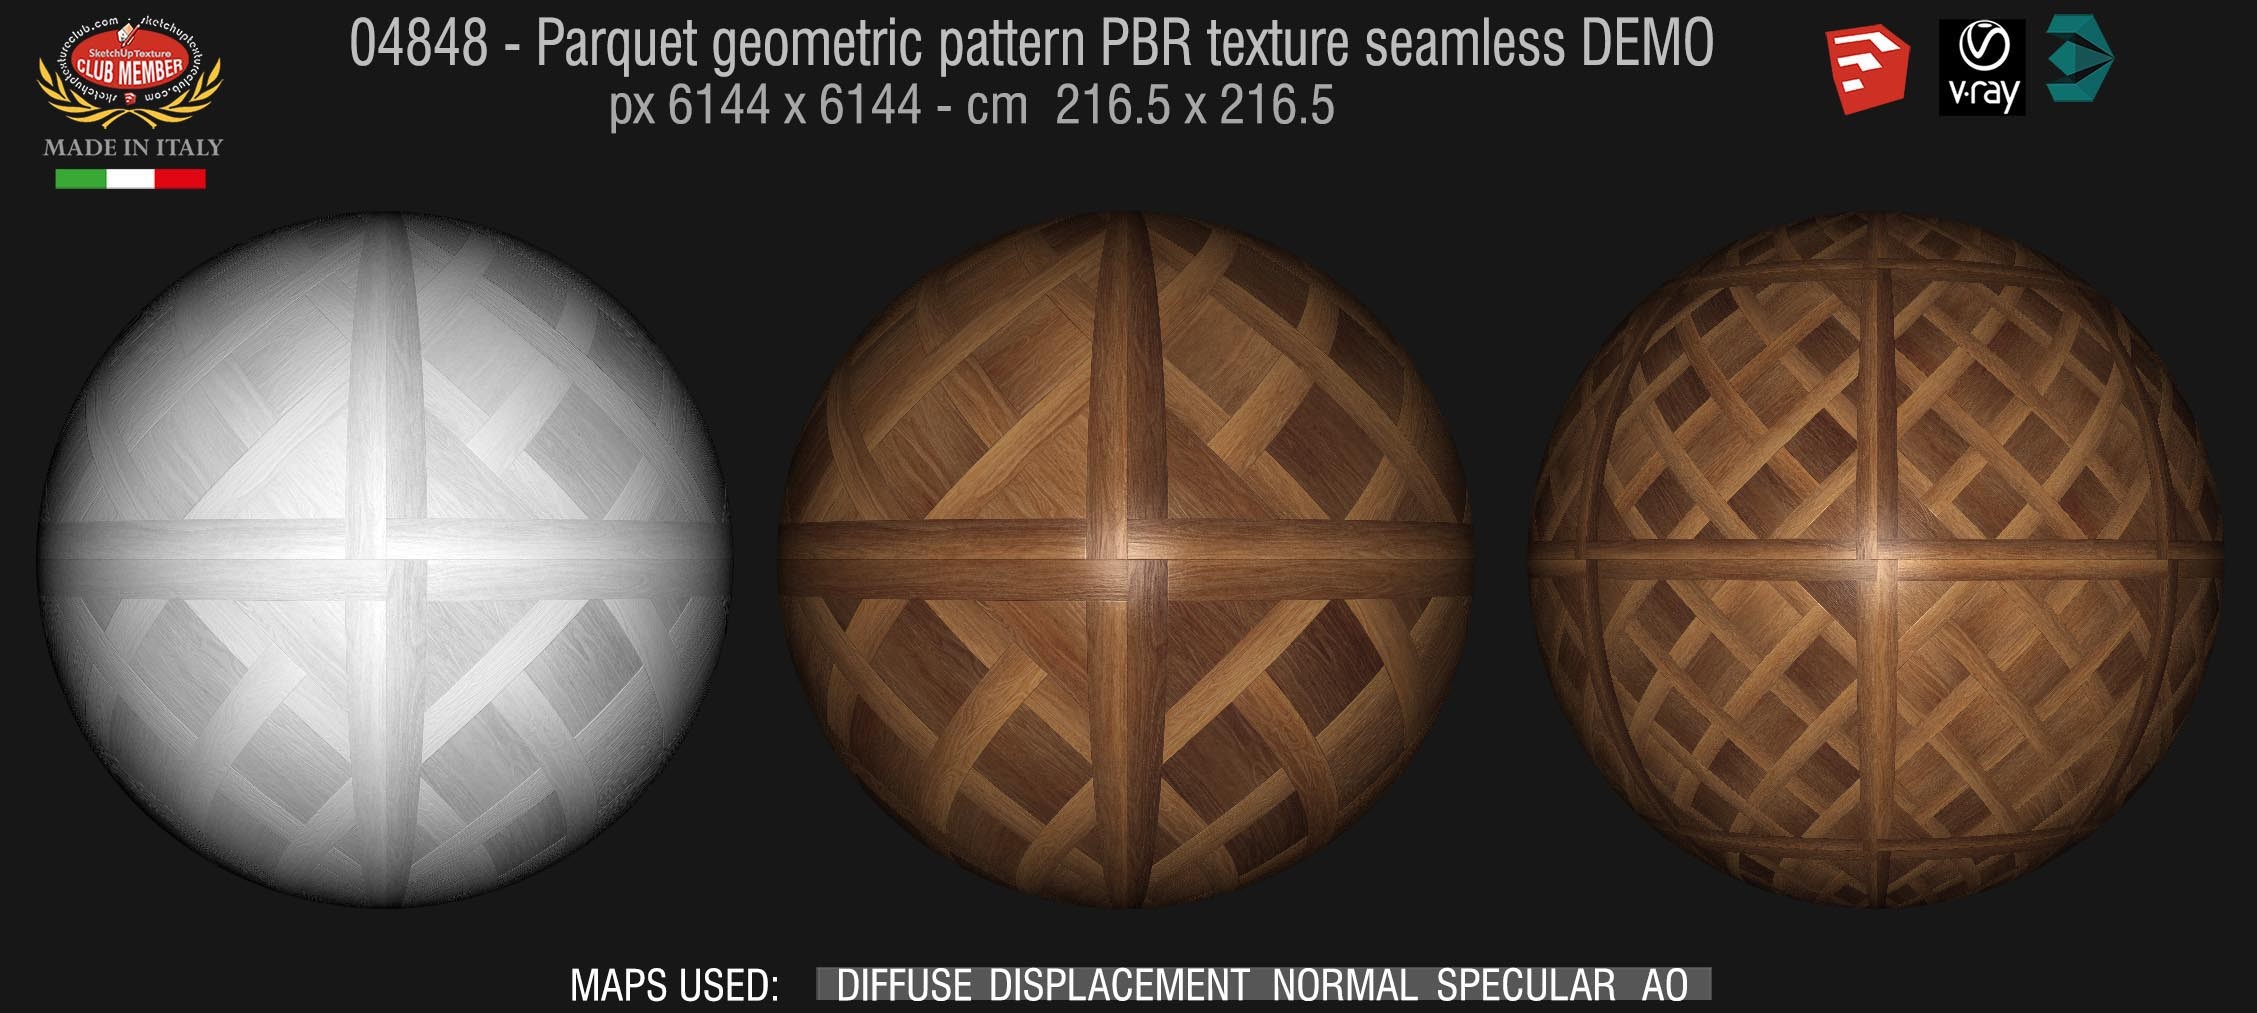 04848 Parquet geometric pattern PBR texture seamless DEMO